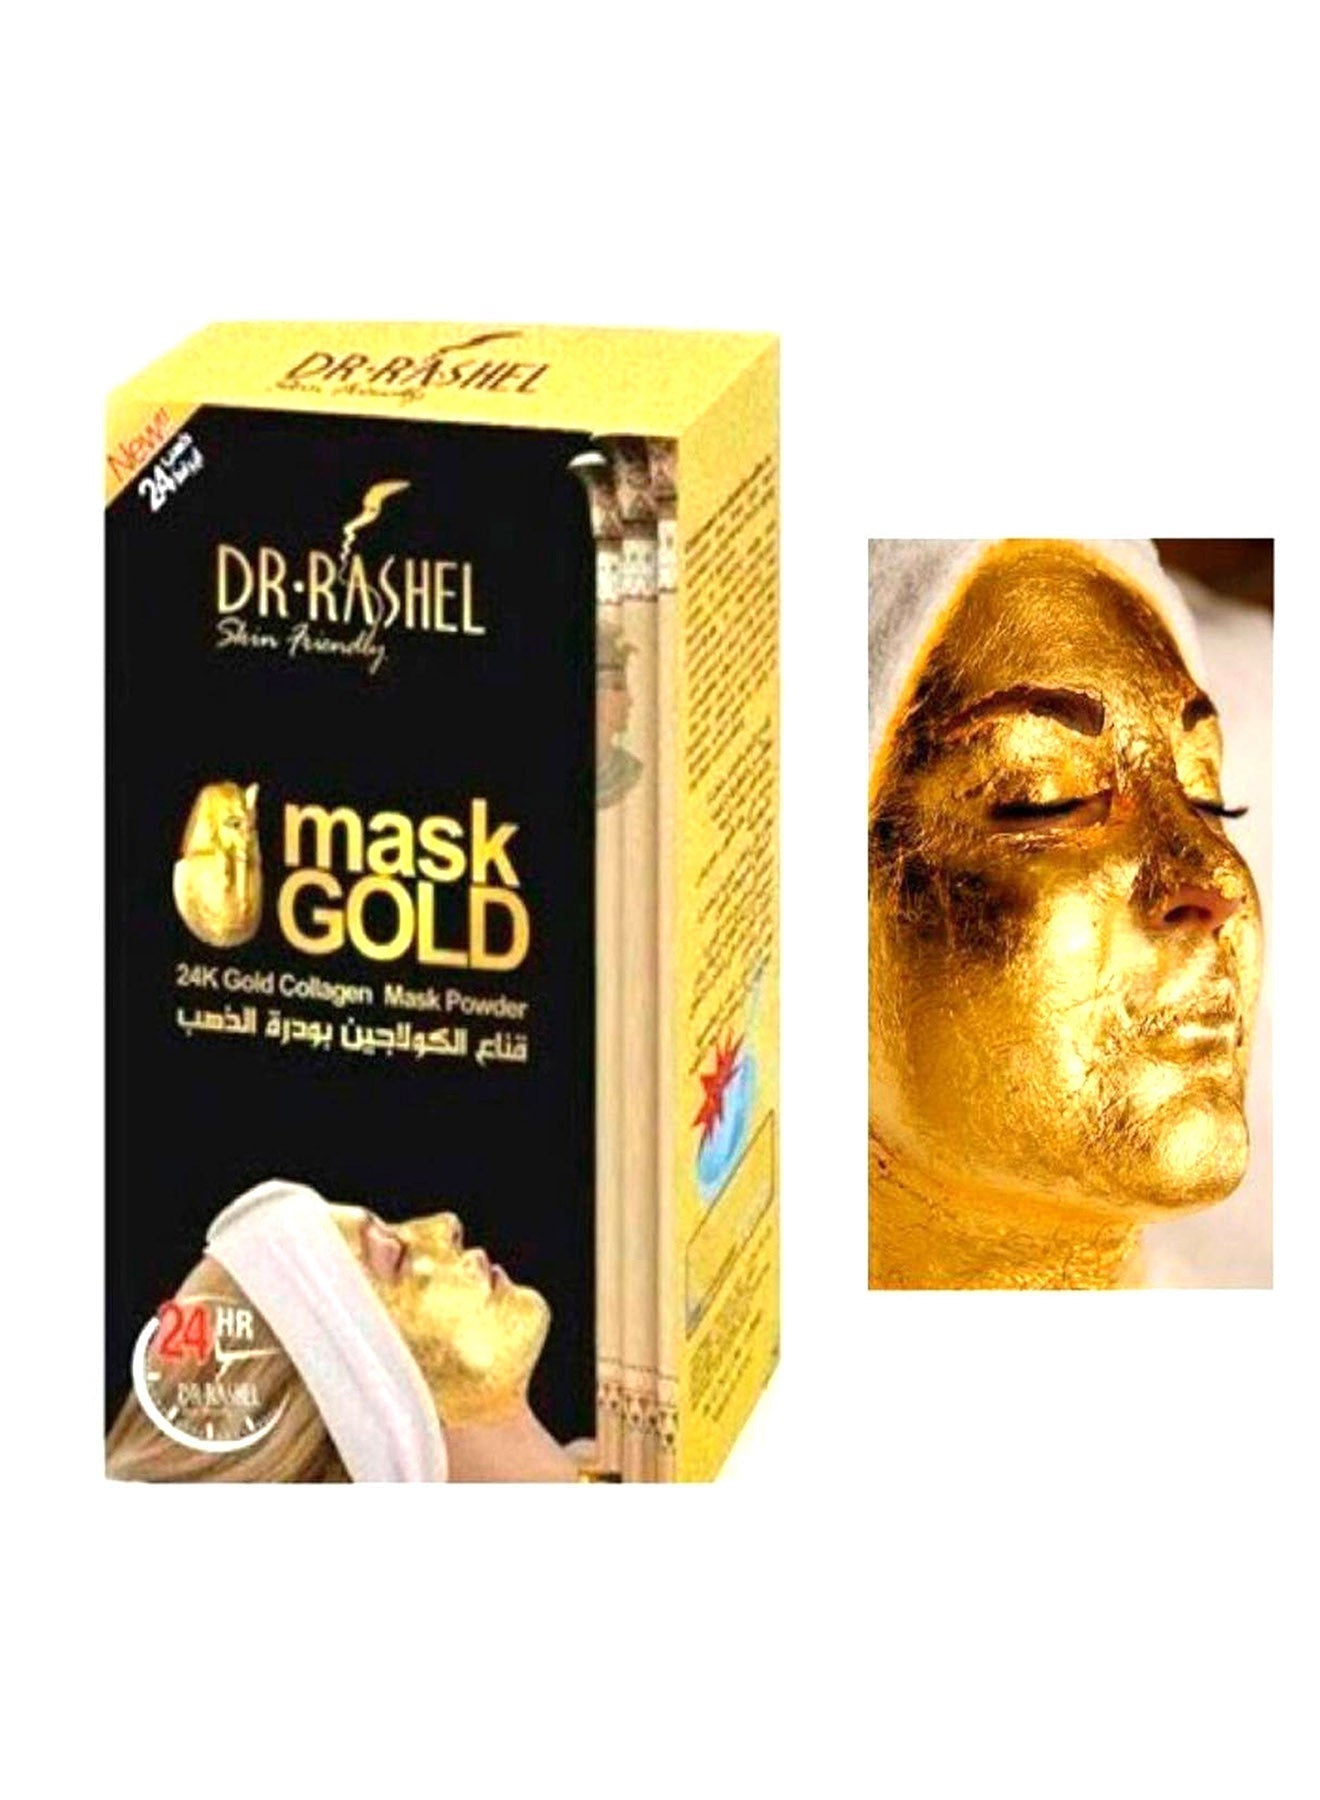 Dr Rashel 24k Gold Collagen Mask powder 300g Value Pack of 12 